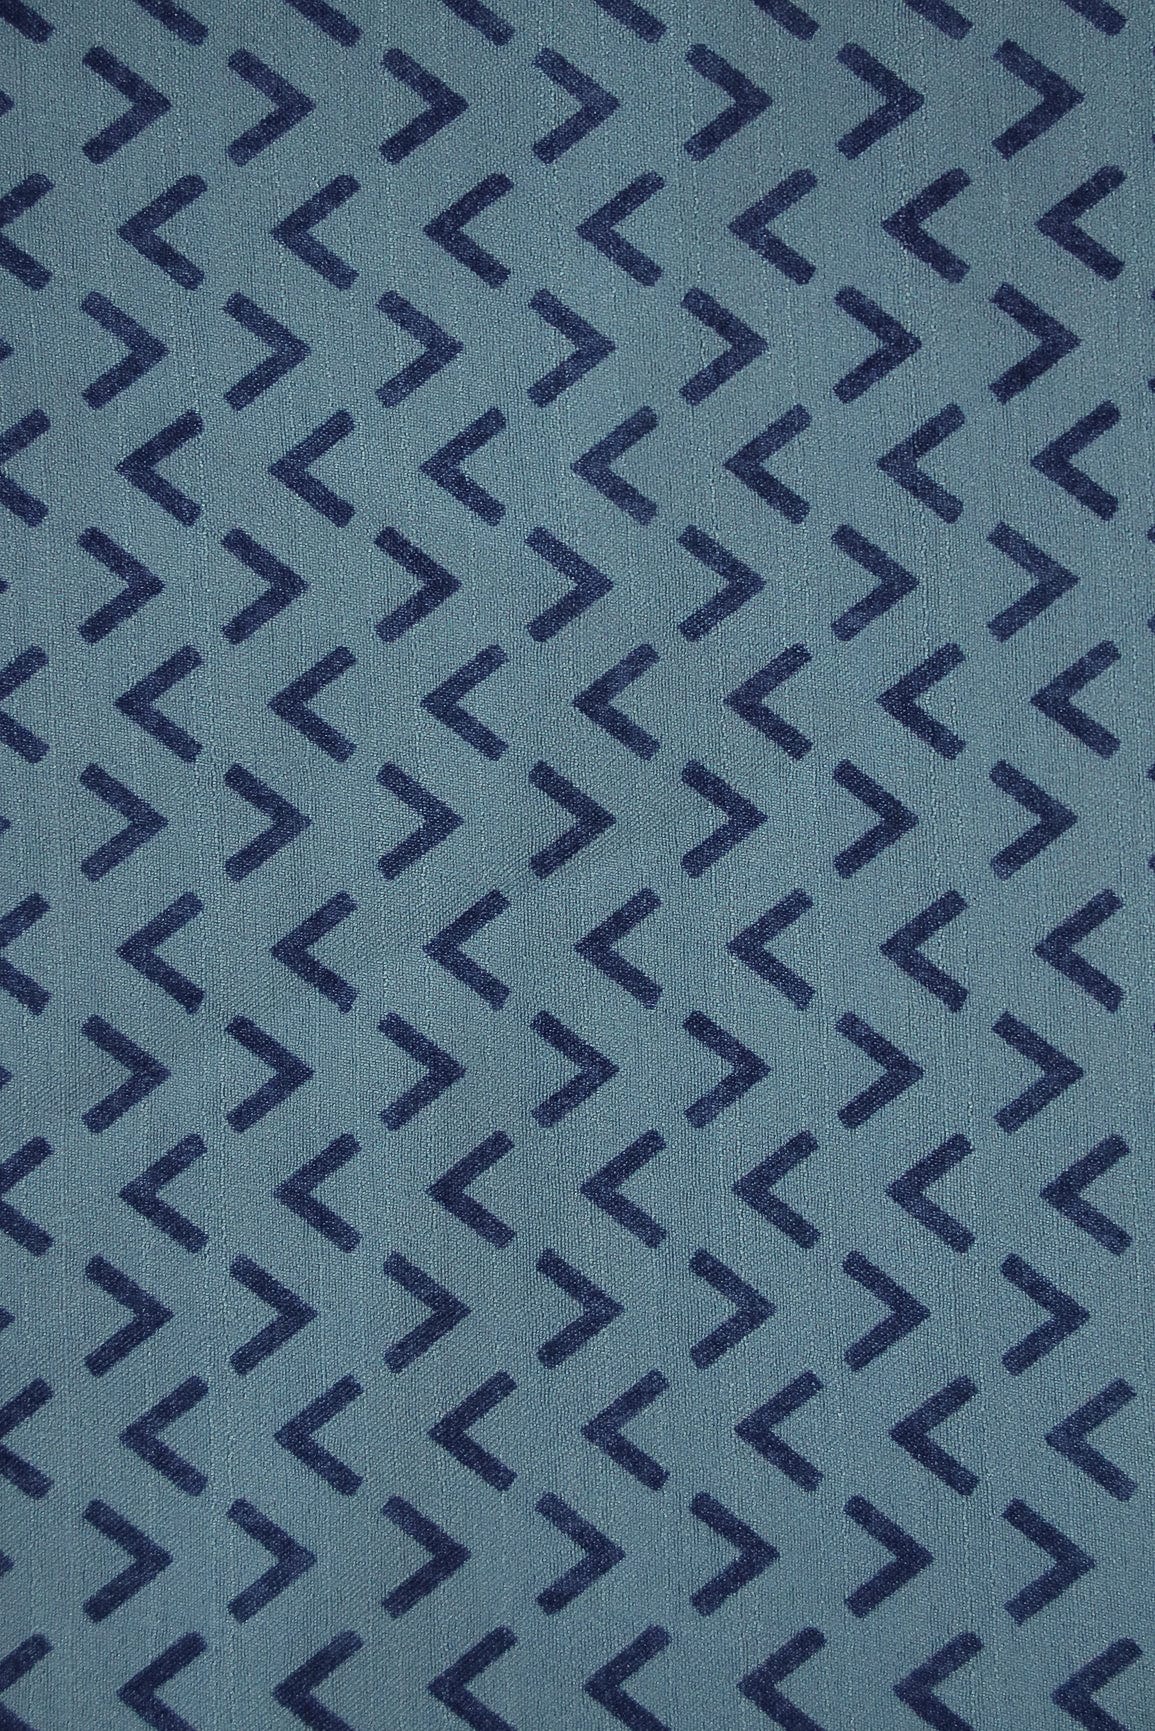 doeraa Prints Blue Arrow Digital Print on Tussar Satin Fabric